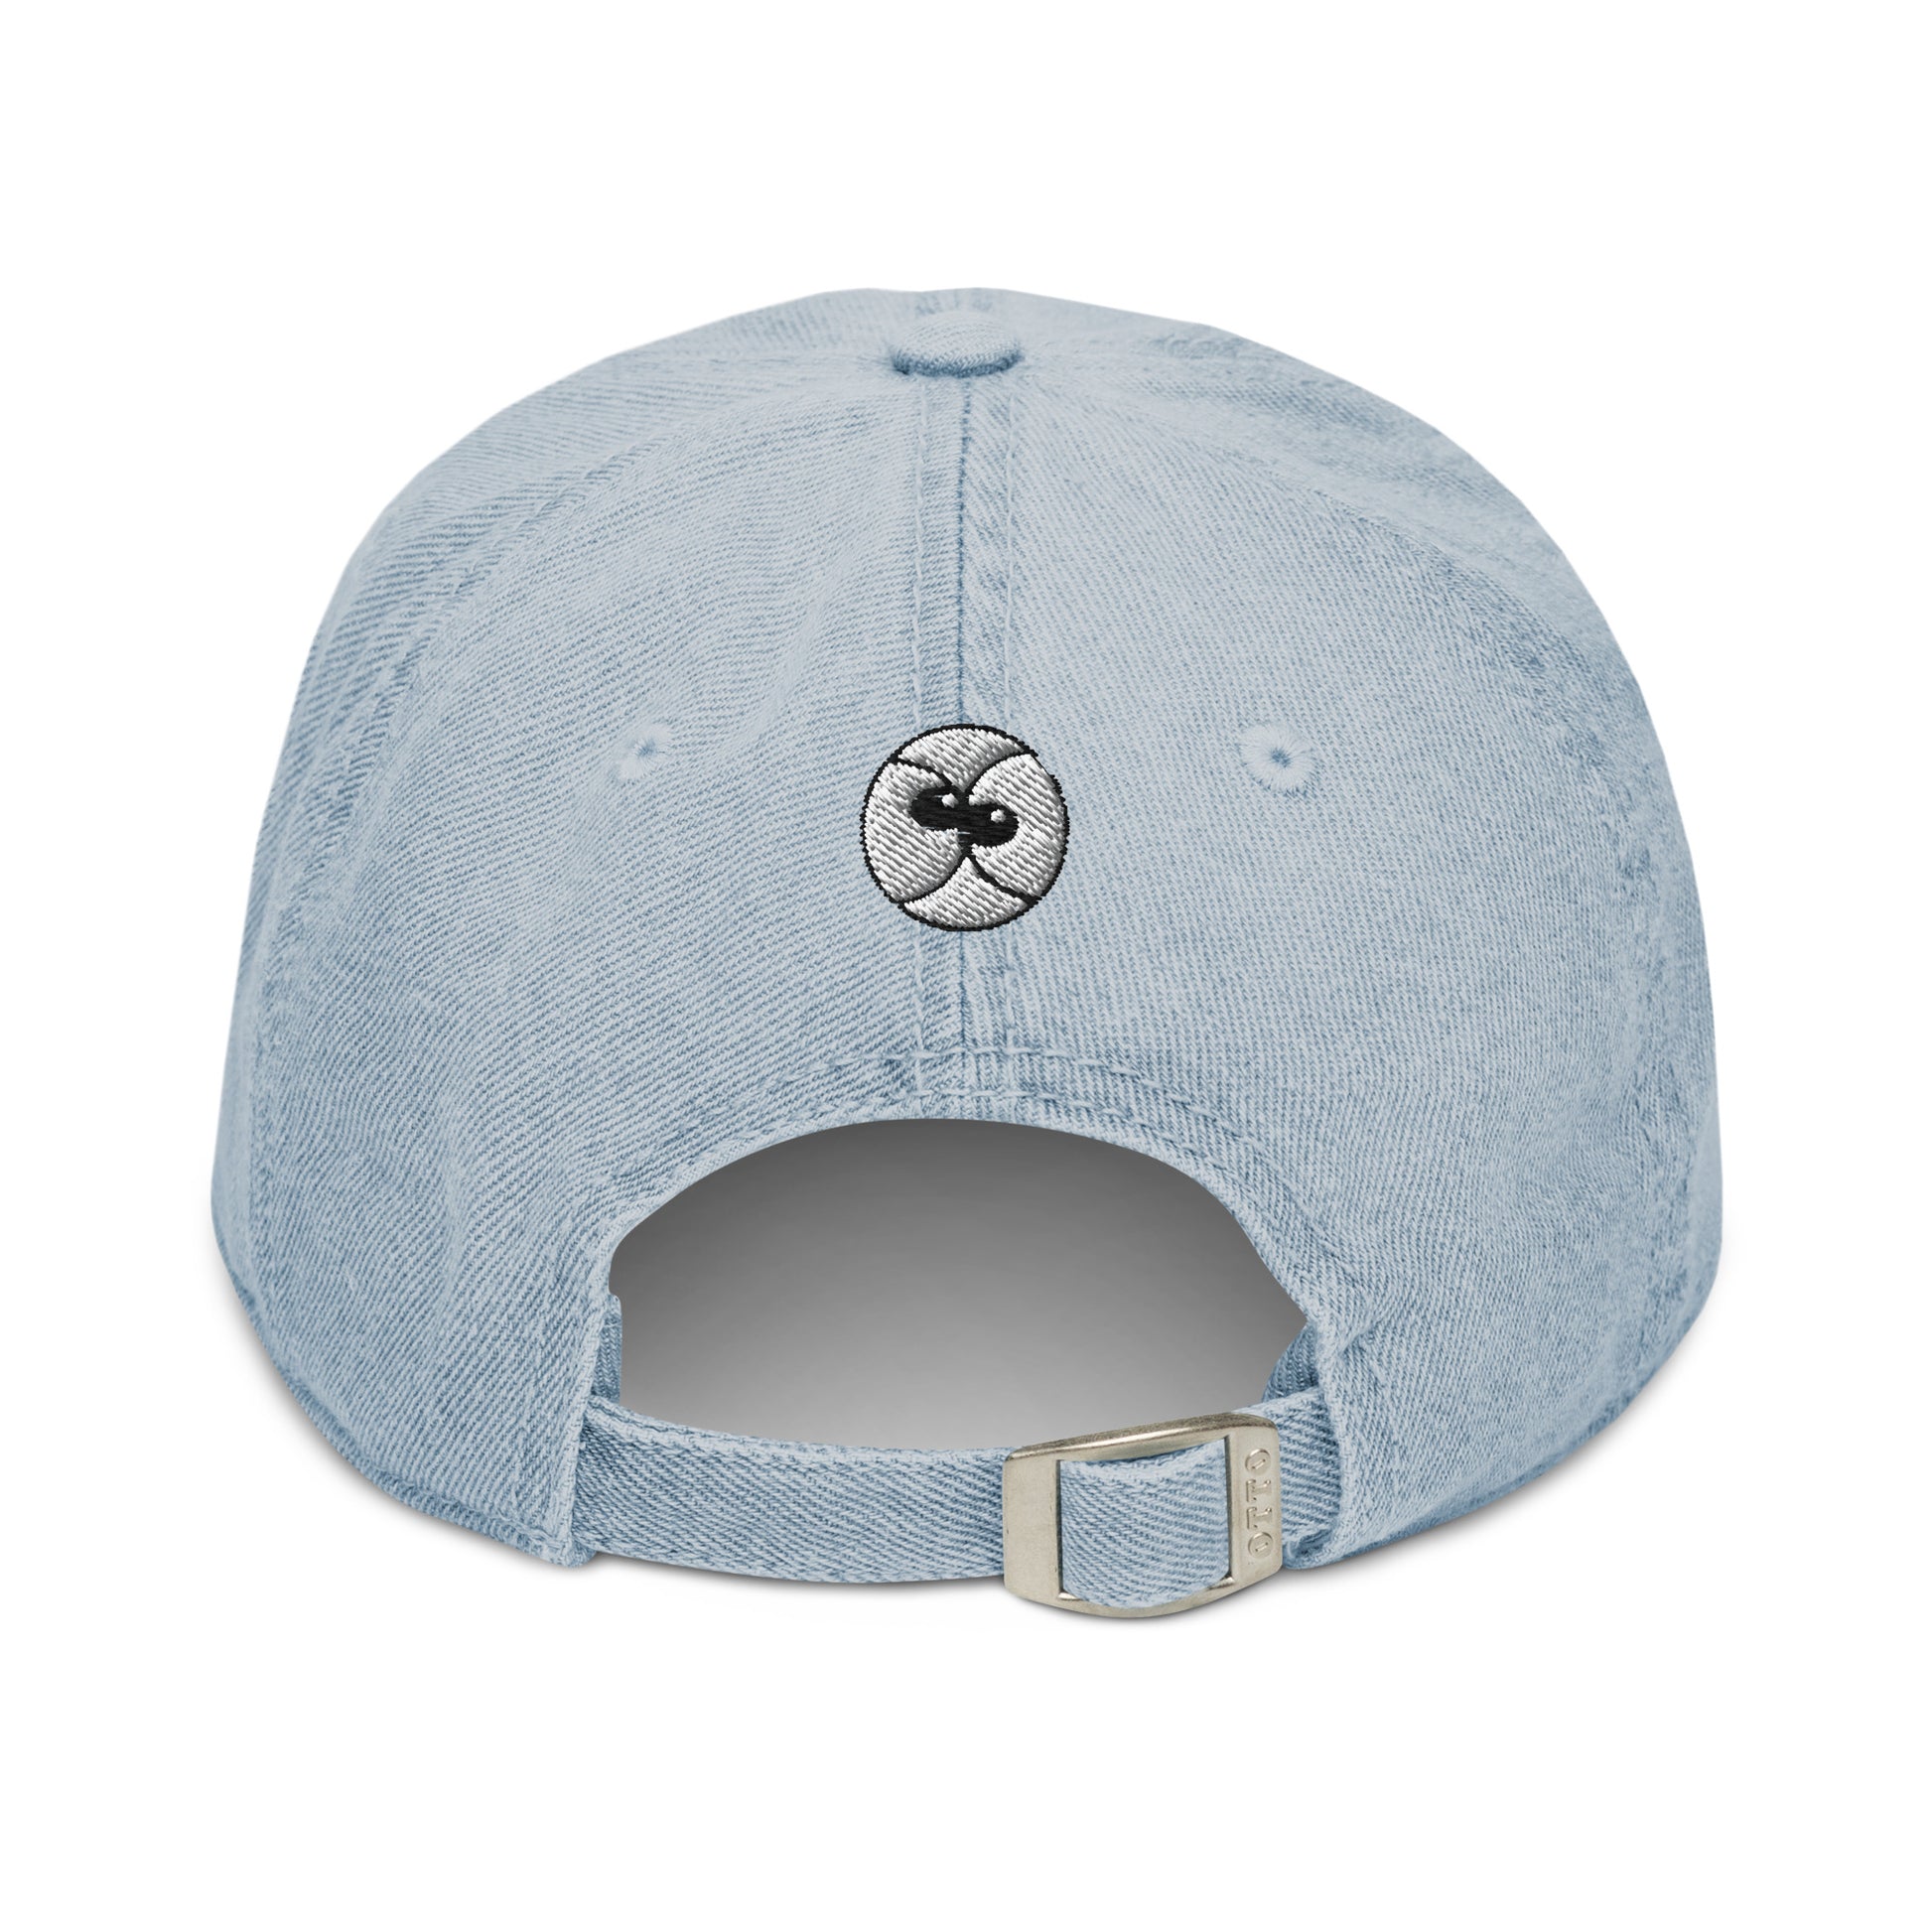 Zoo&co branded Denim Hat. Light blue. Back view